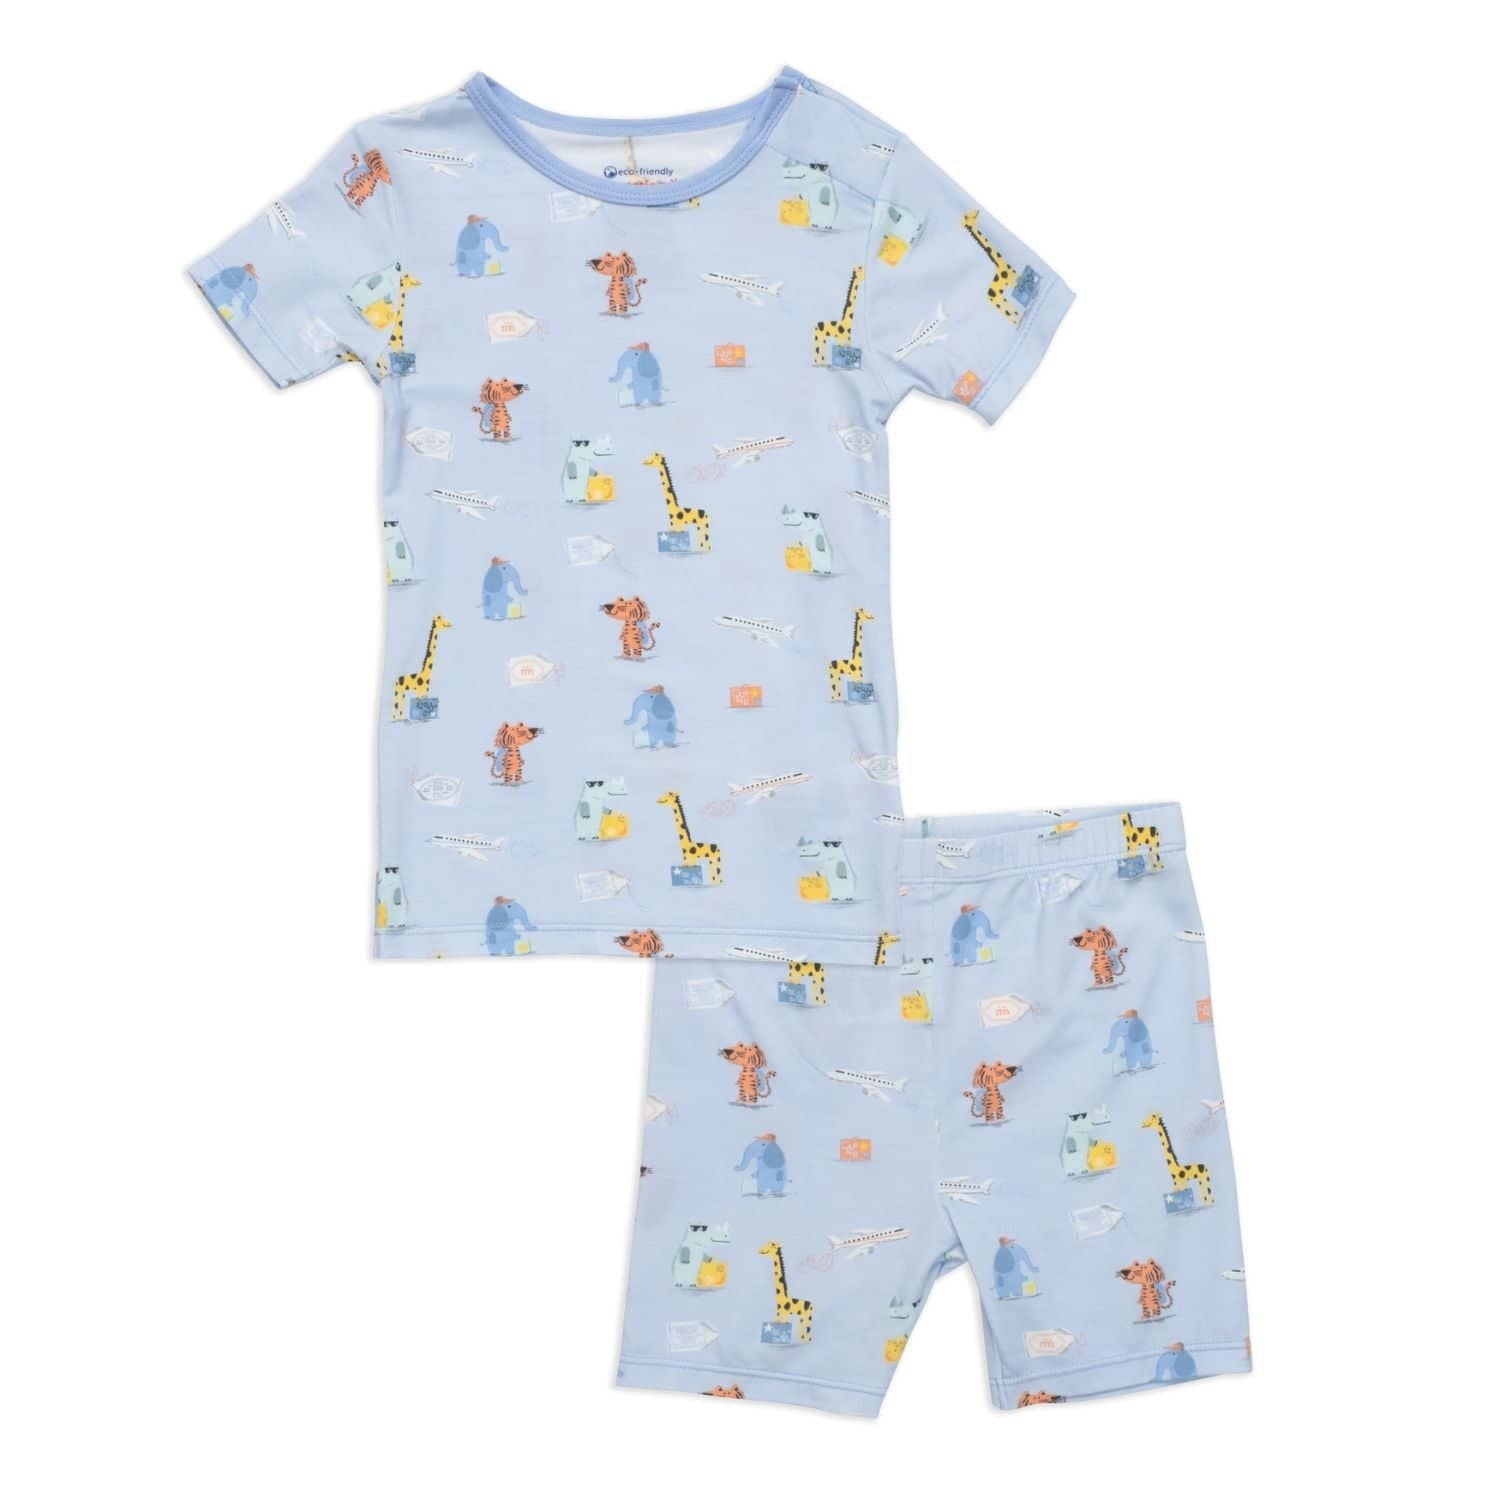 Ready Jet Go Modal Magnetic Toddler Shortie Pajama Set